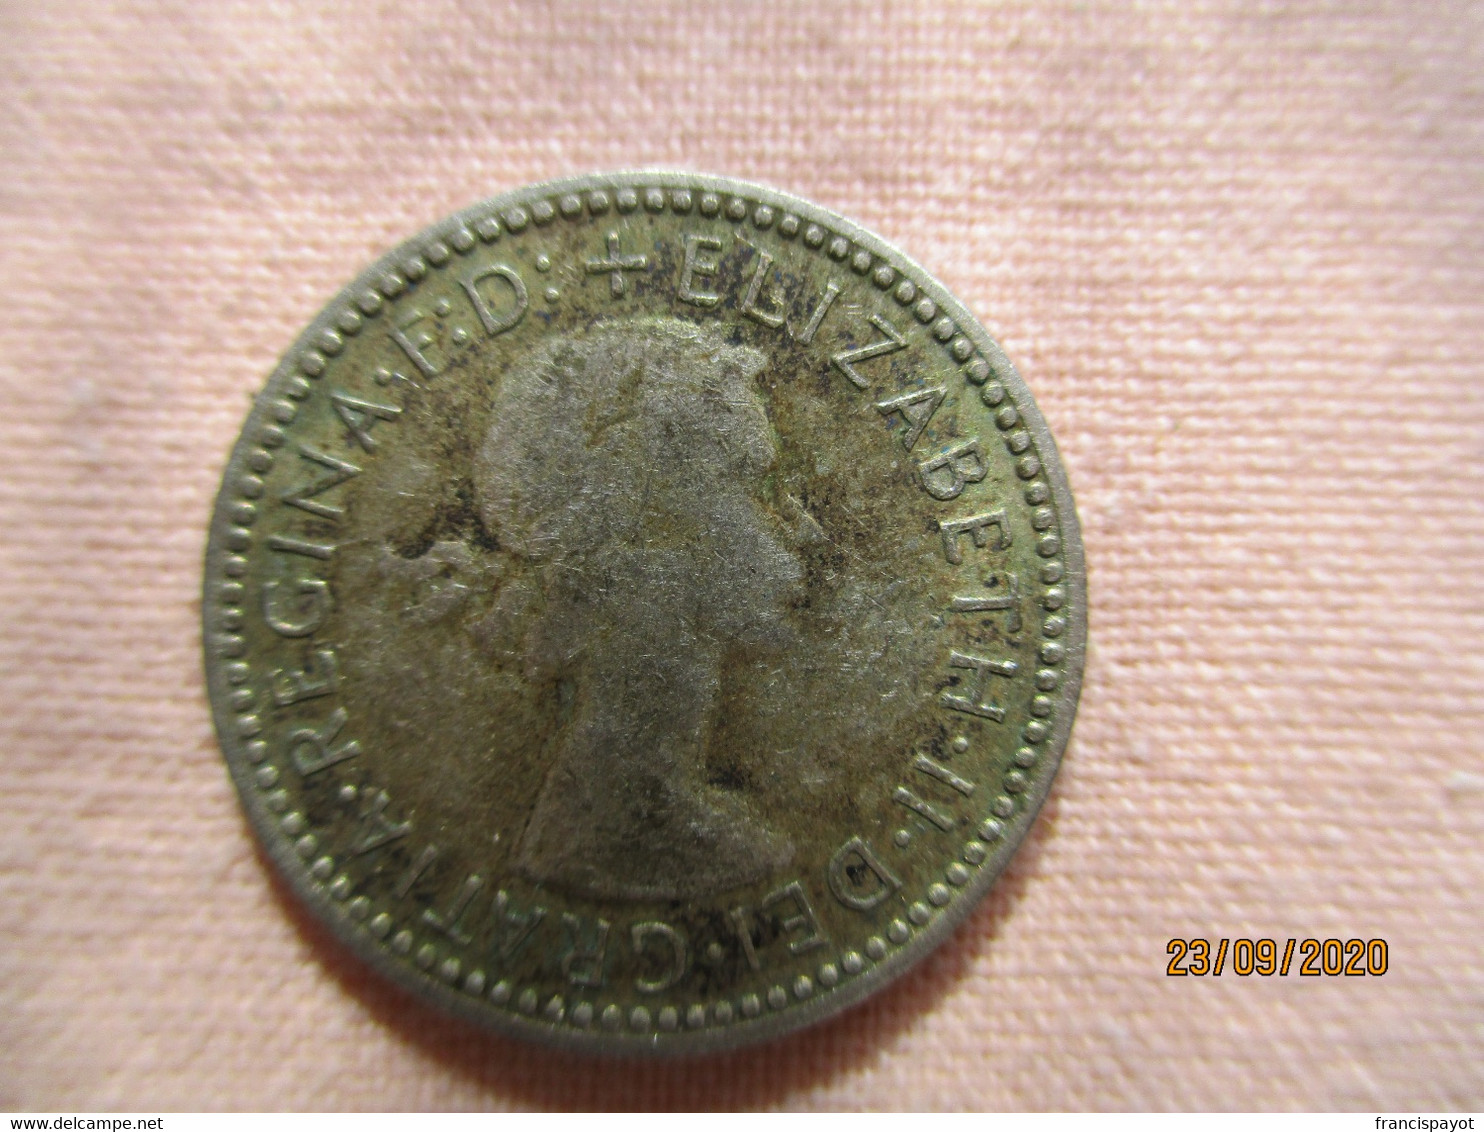 Australia: 6 Pence 1959 - Sixpence